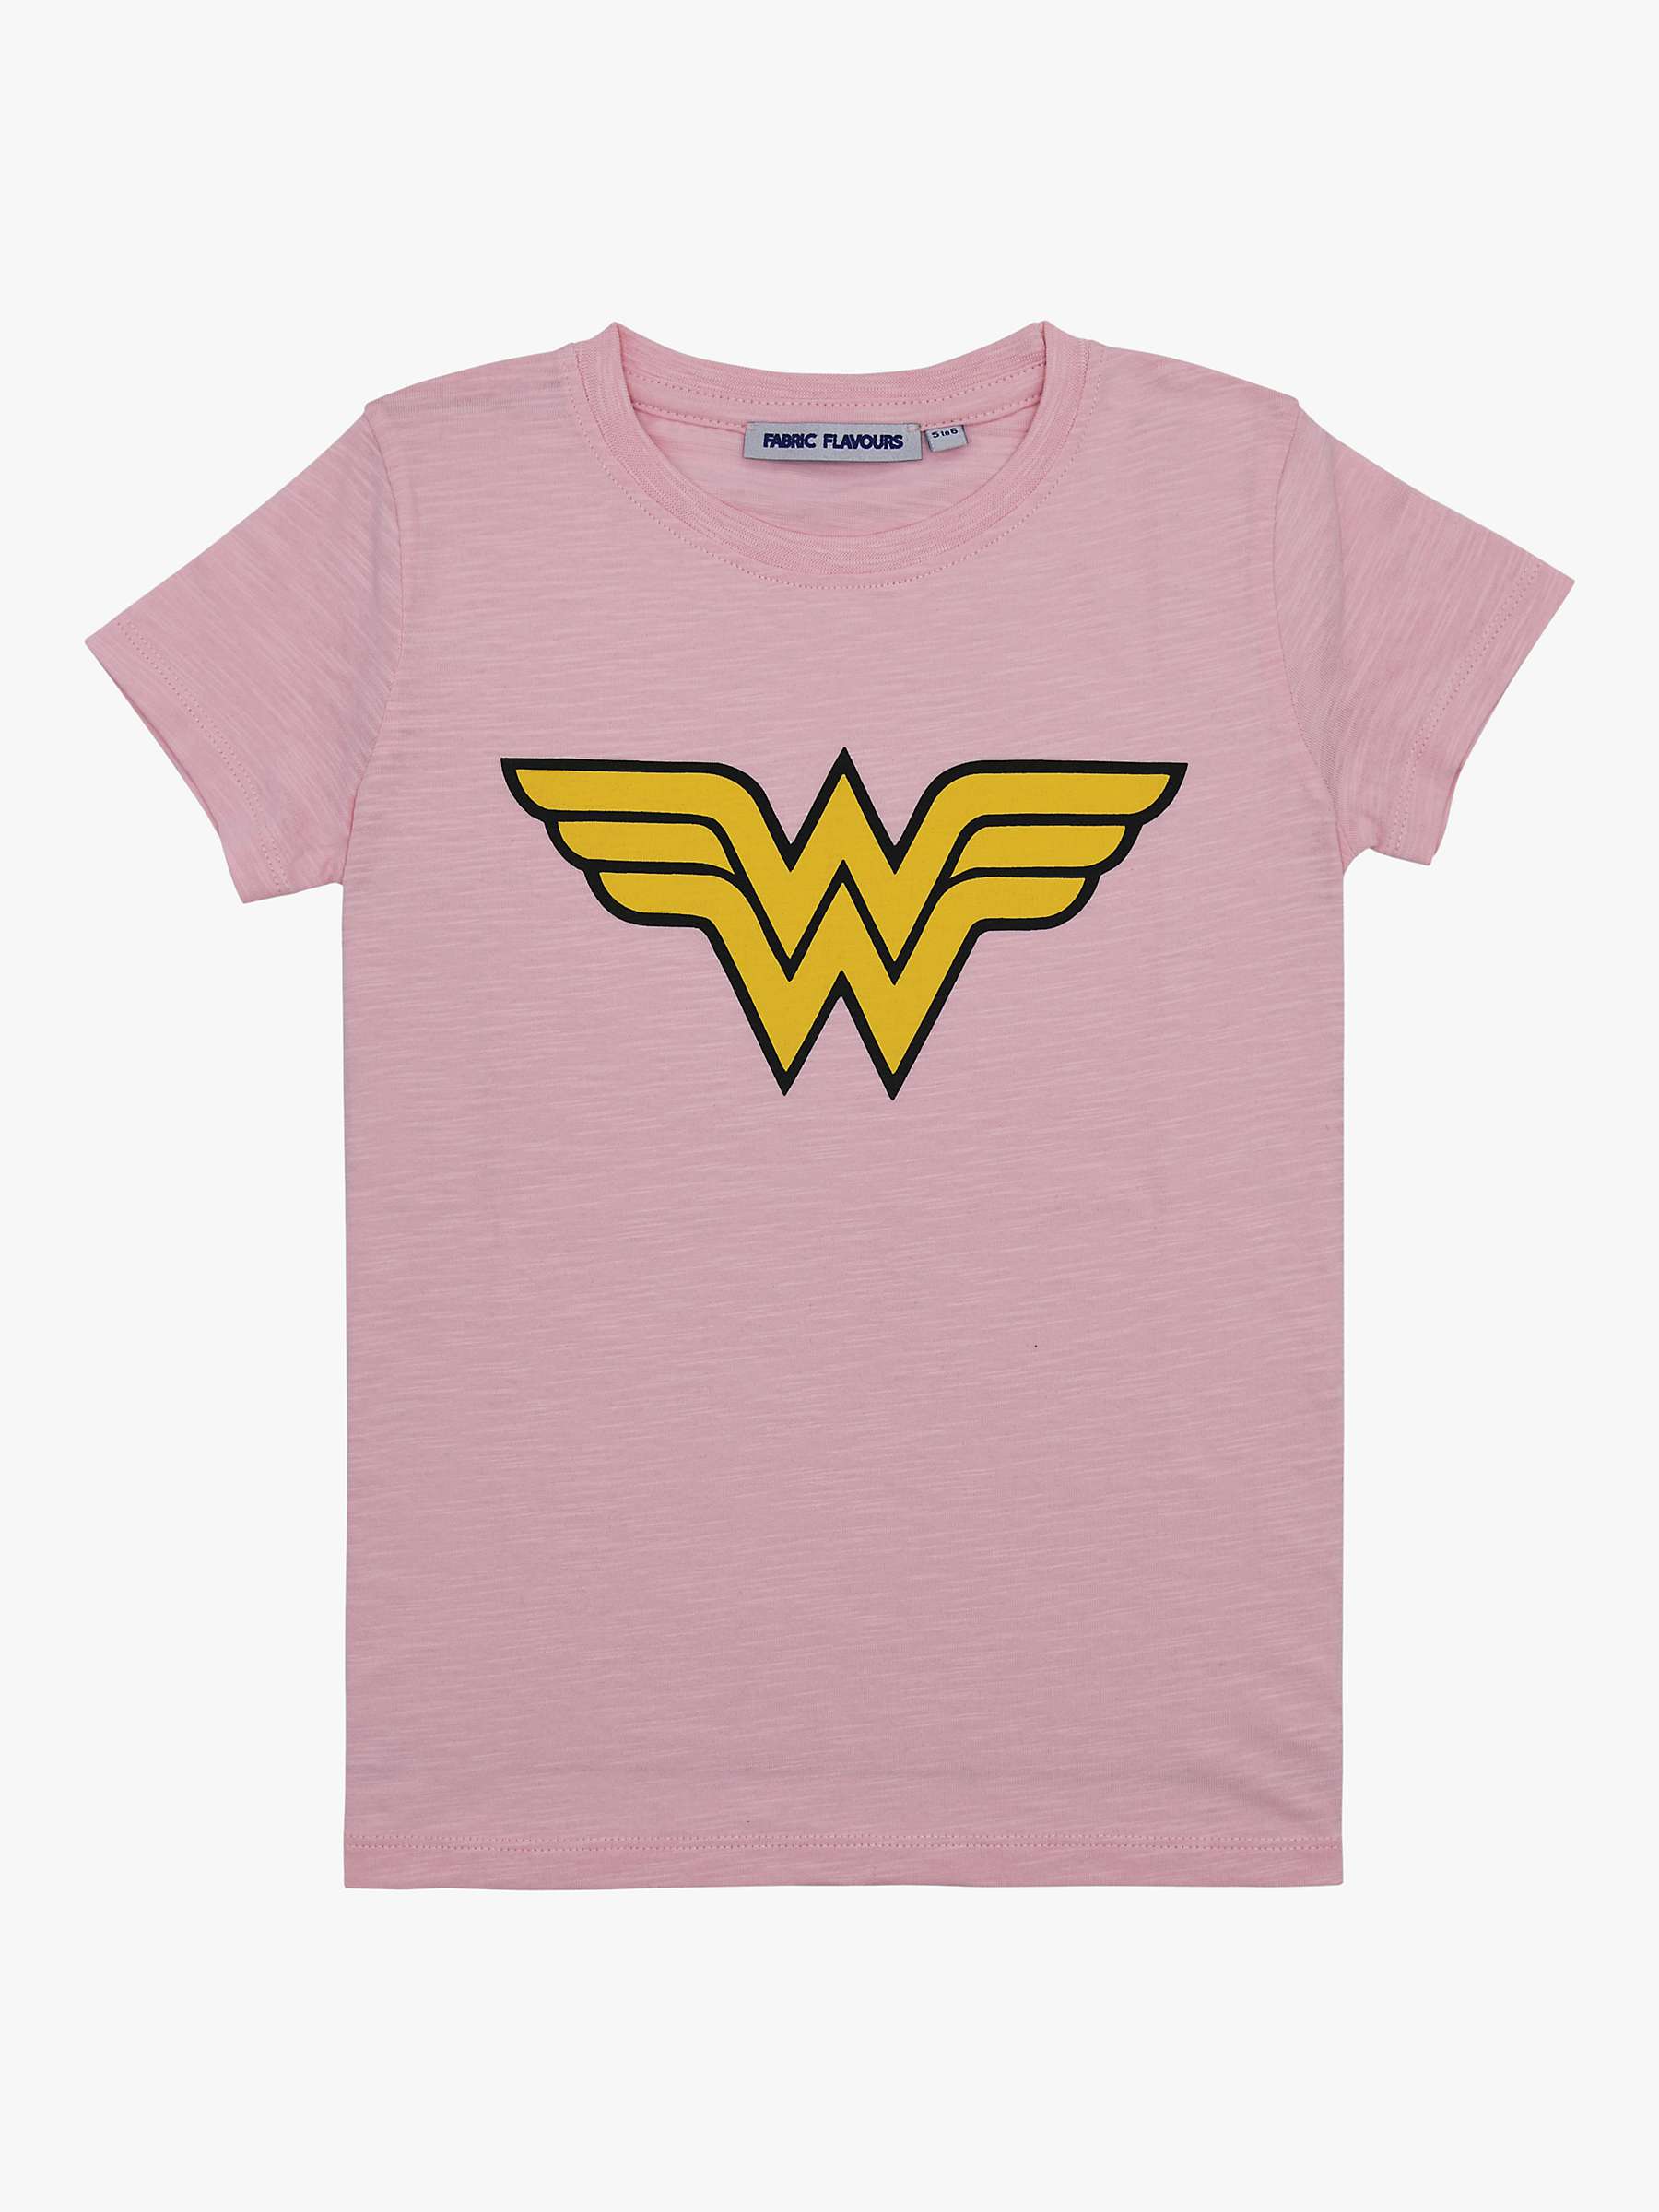 Buy Fabric Flavours Kids' Wonder Woman T-Shirt, Pink Online at johnlewis.com